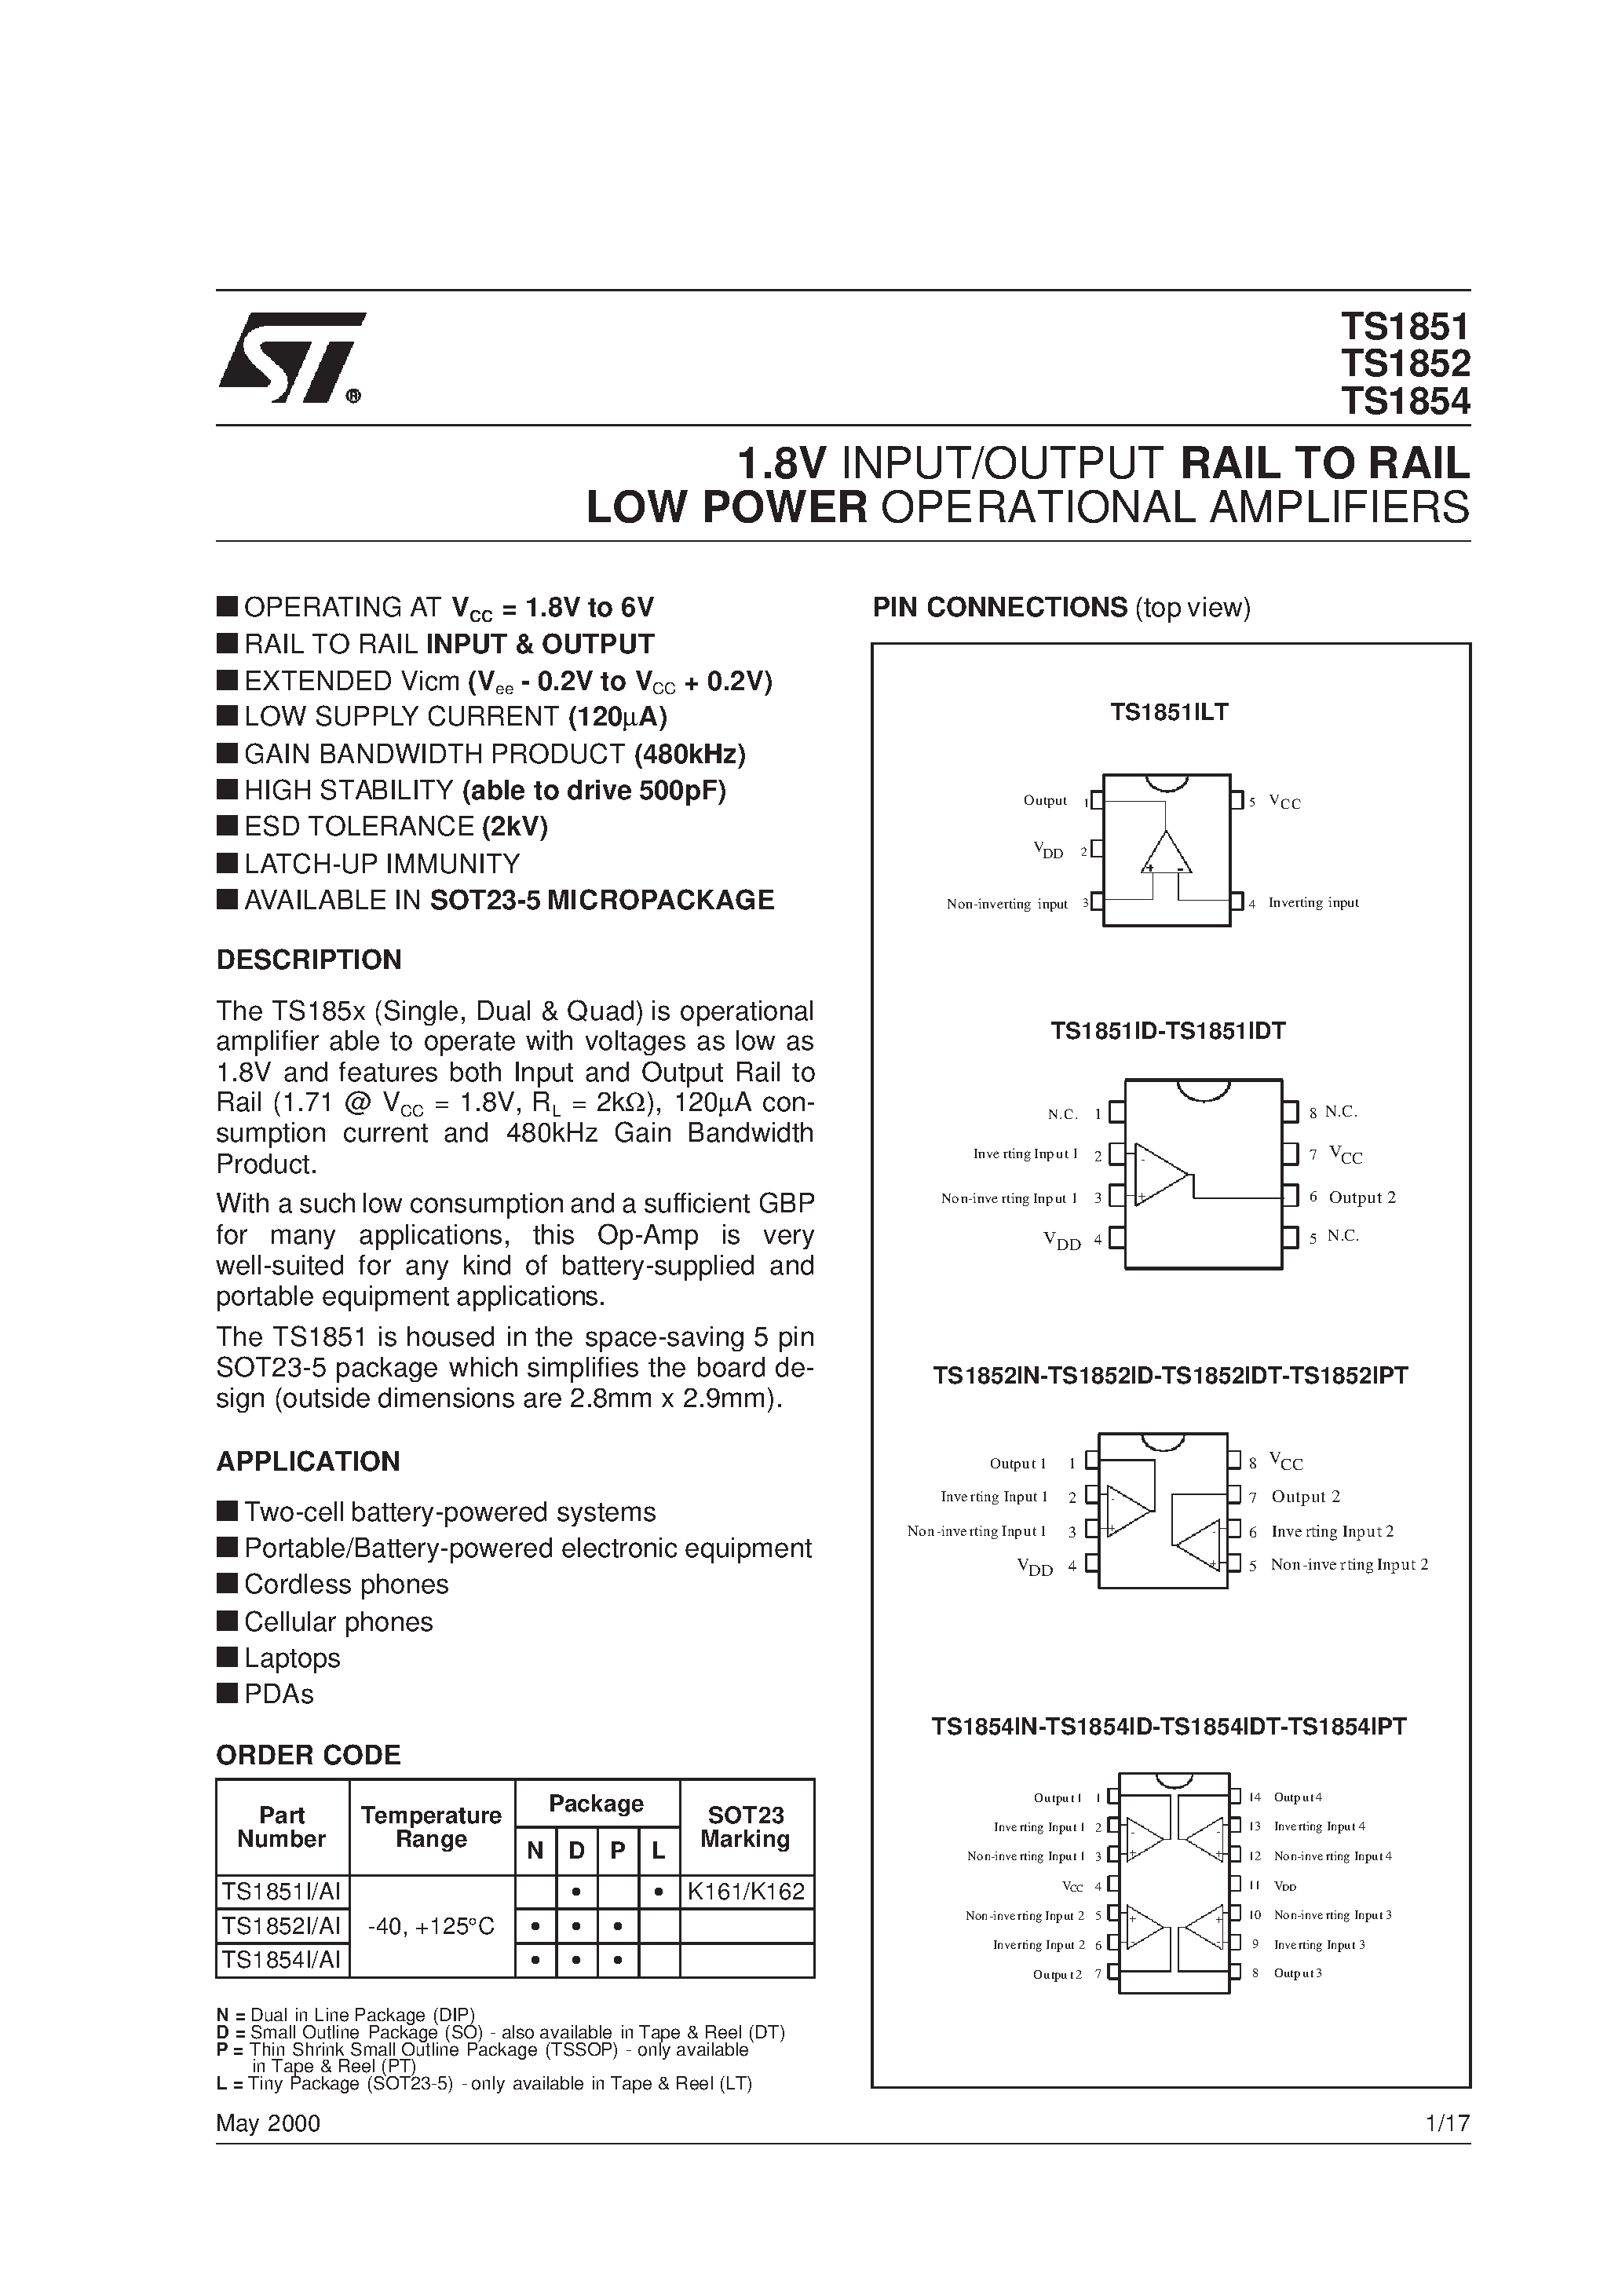 Datasheet TS1852AI - 1.8V INPUT/OUTPUT RAIL TO RAIL LOW POWER OPERATIONAL AMPLIFIERS page 1